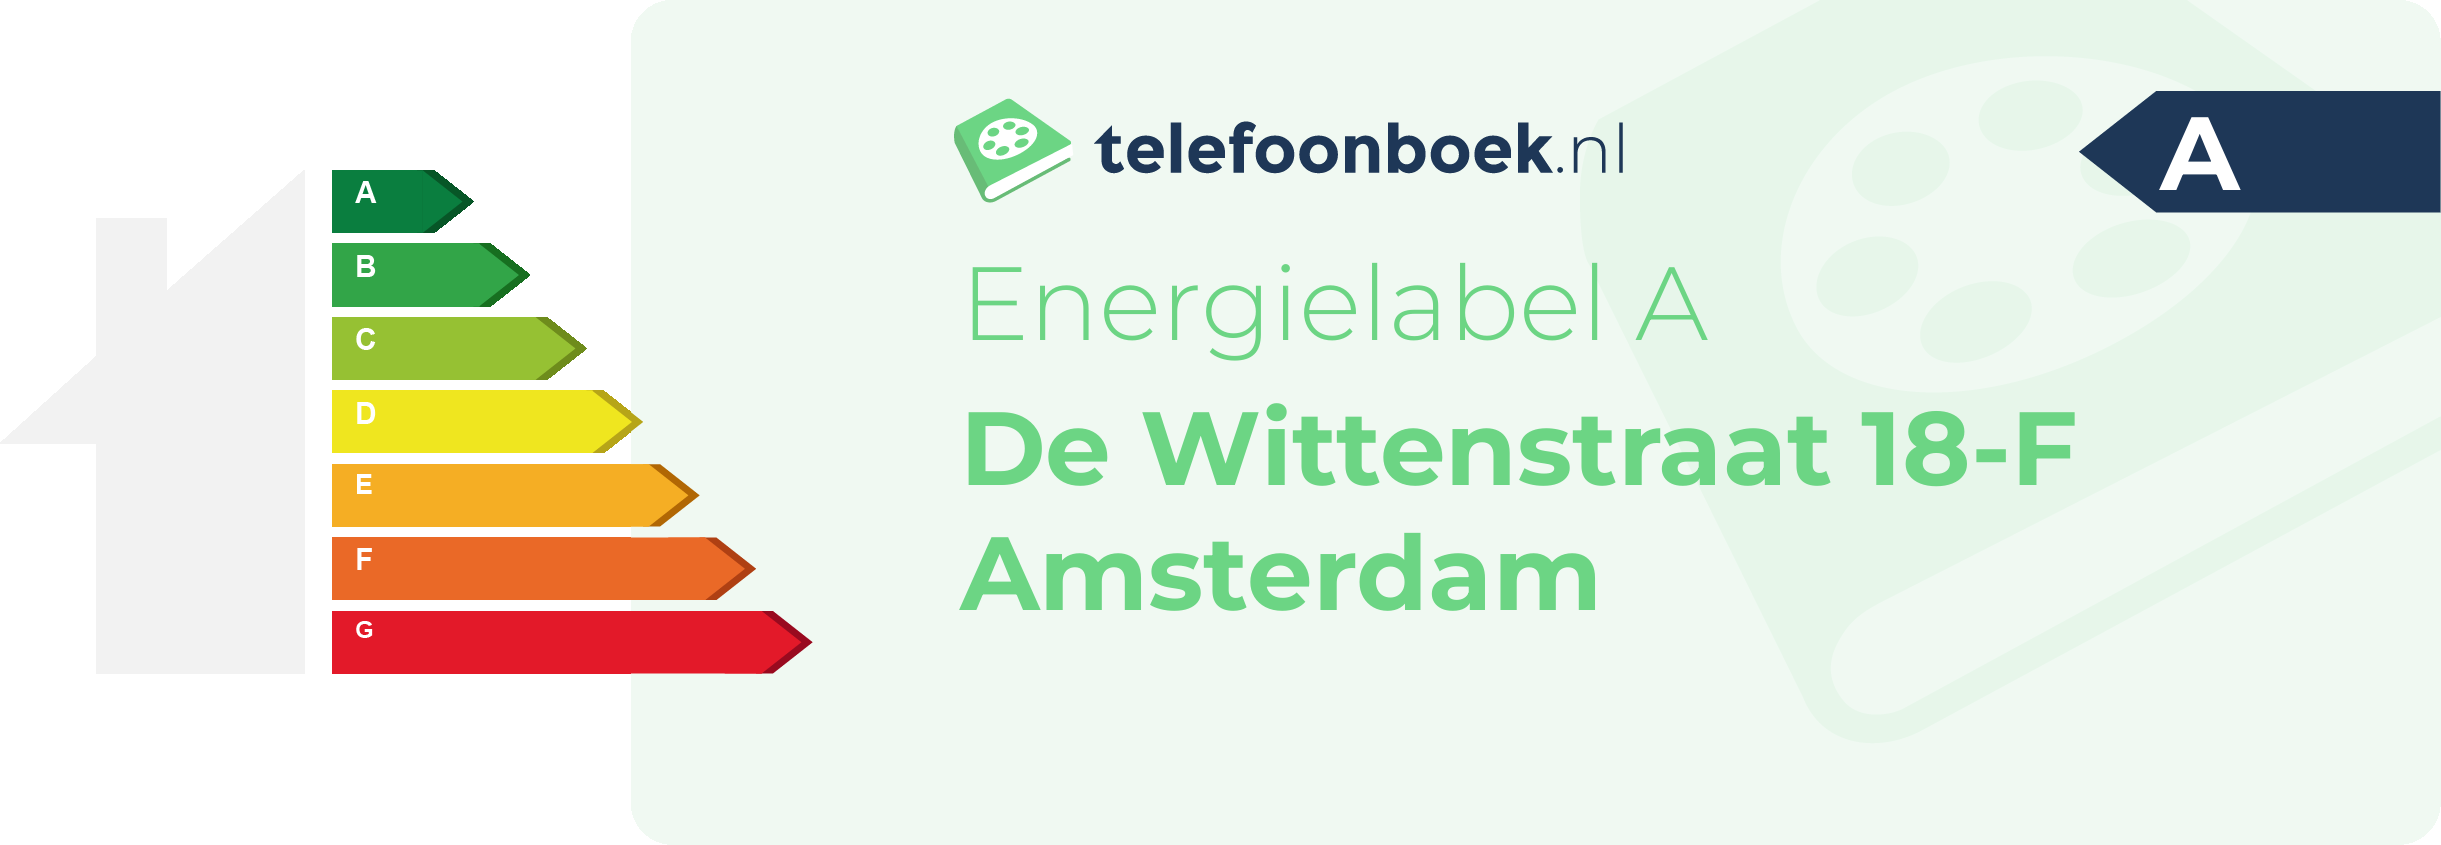 Energielabel De Wittenstraat 18-F Amsterdam